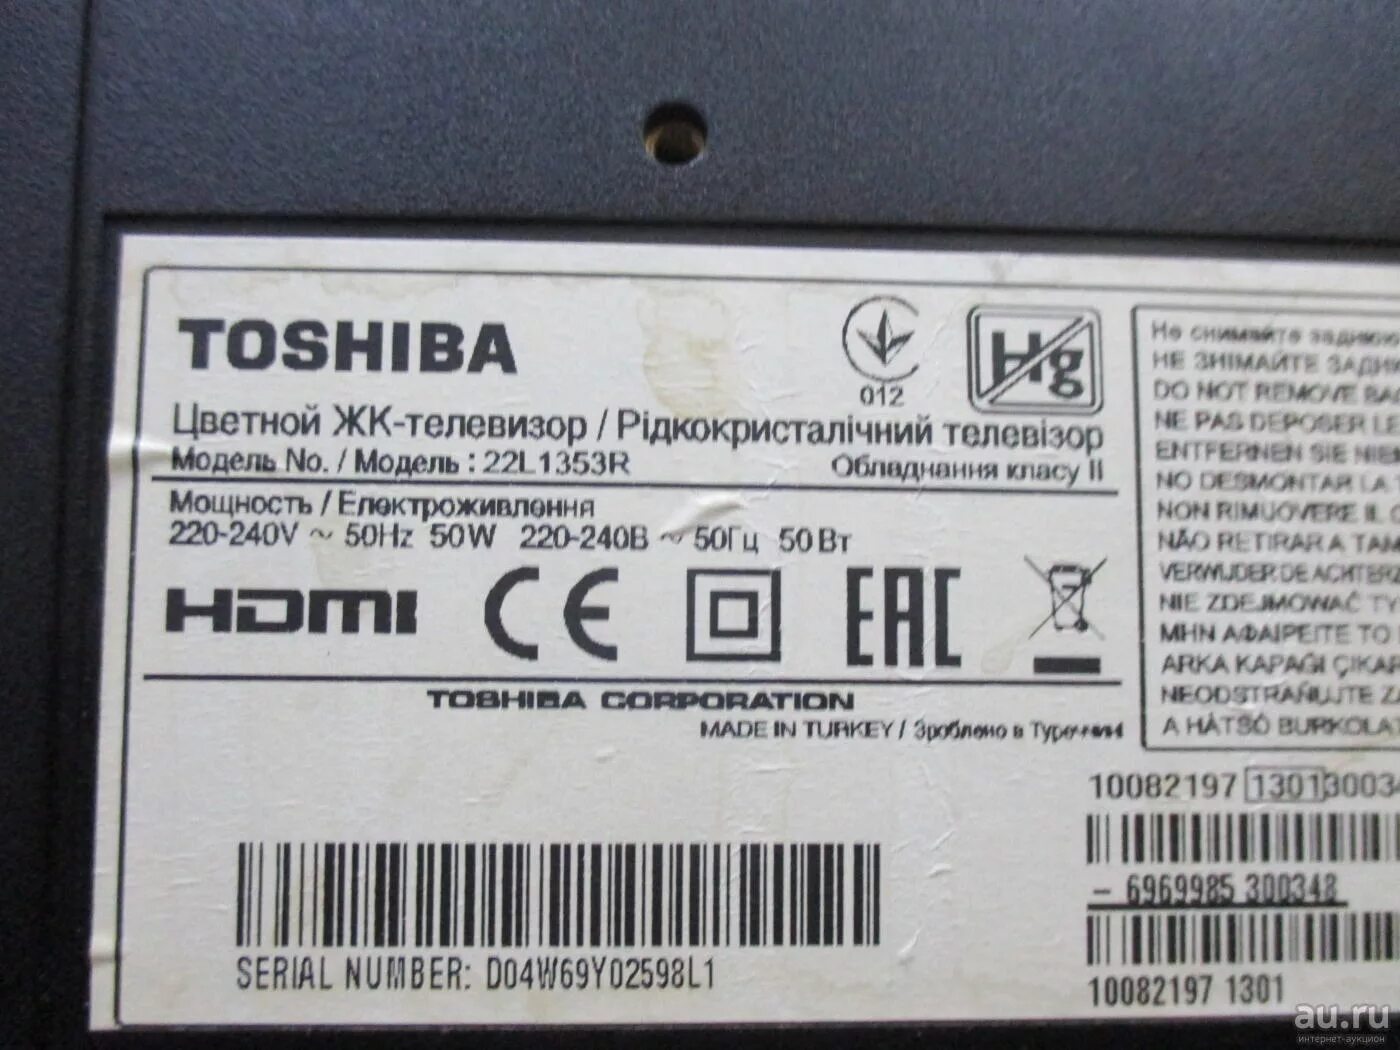 Телевизор тошиба есть. Toshiba 22l1353. Toshiba 22l1353 led. Телевизор Toshiba модель no/ 22l1353l. Toshiba 22dv733r.